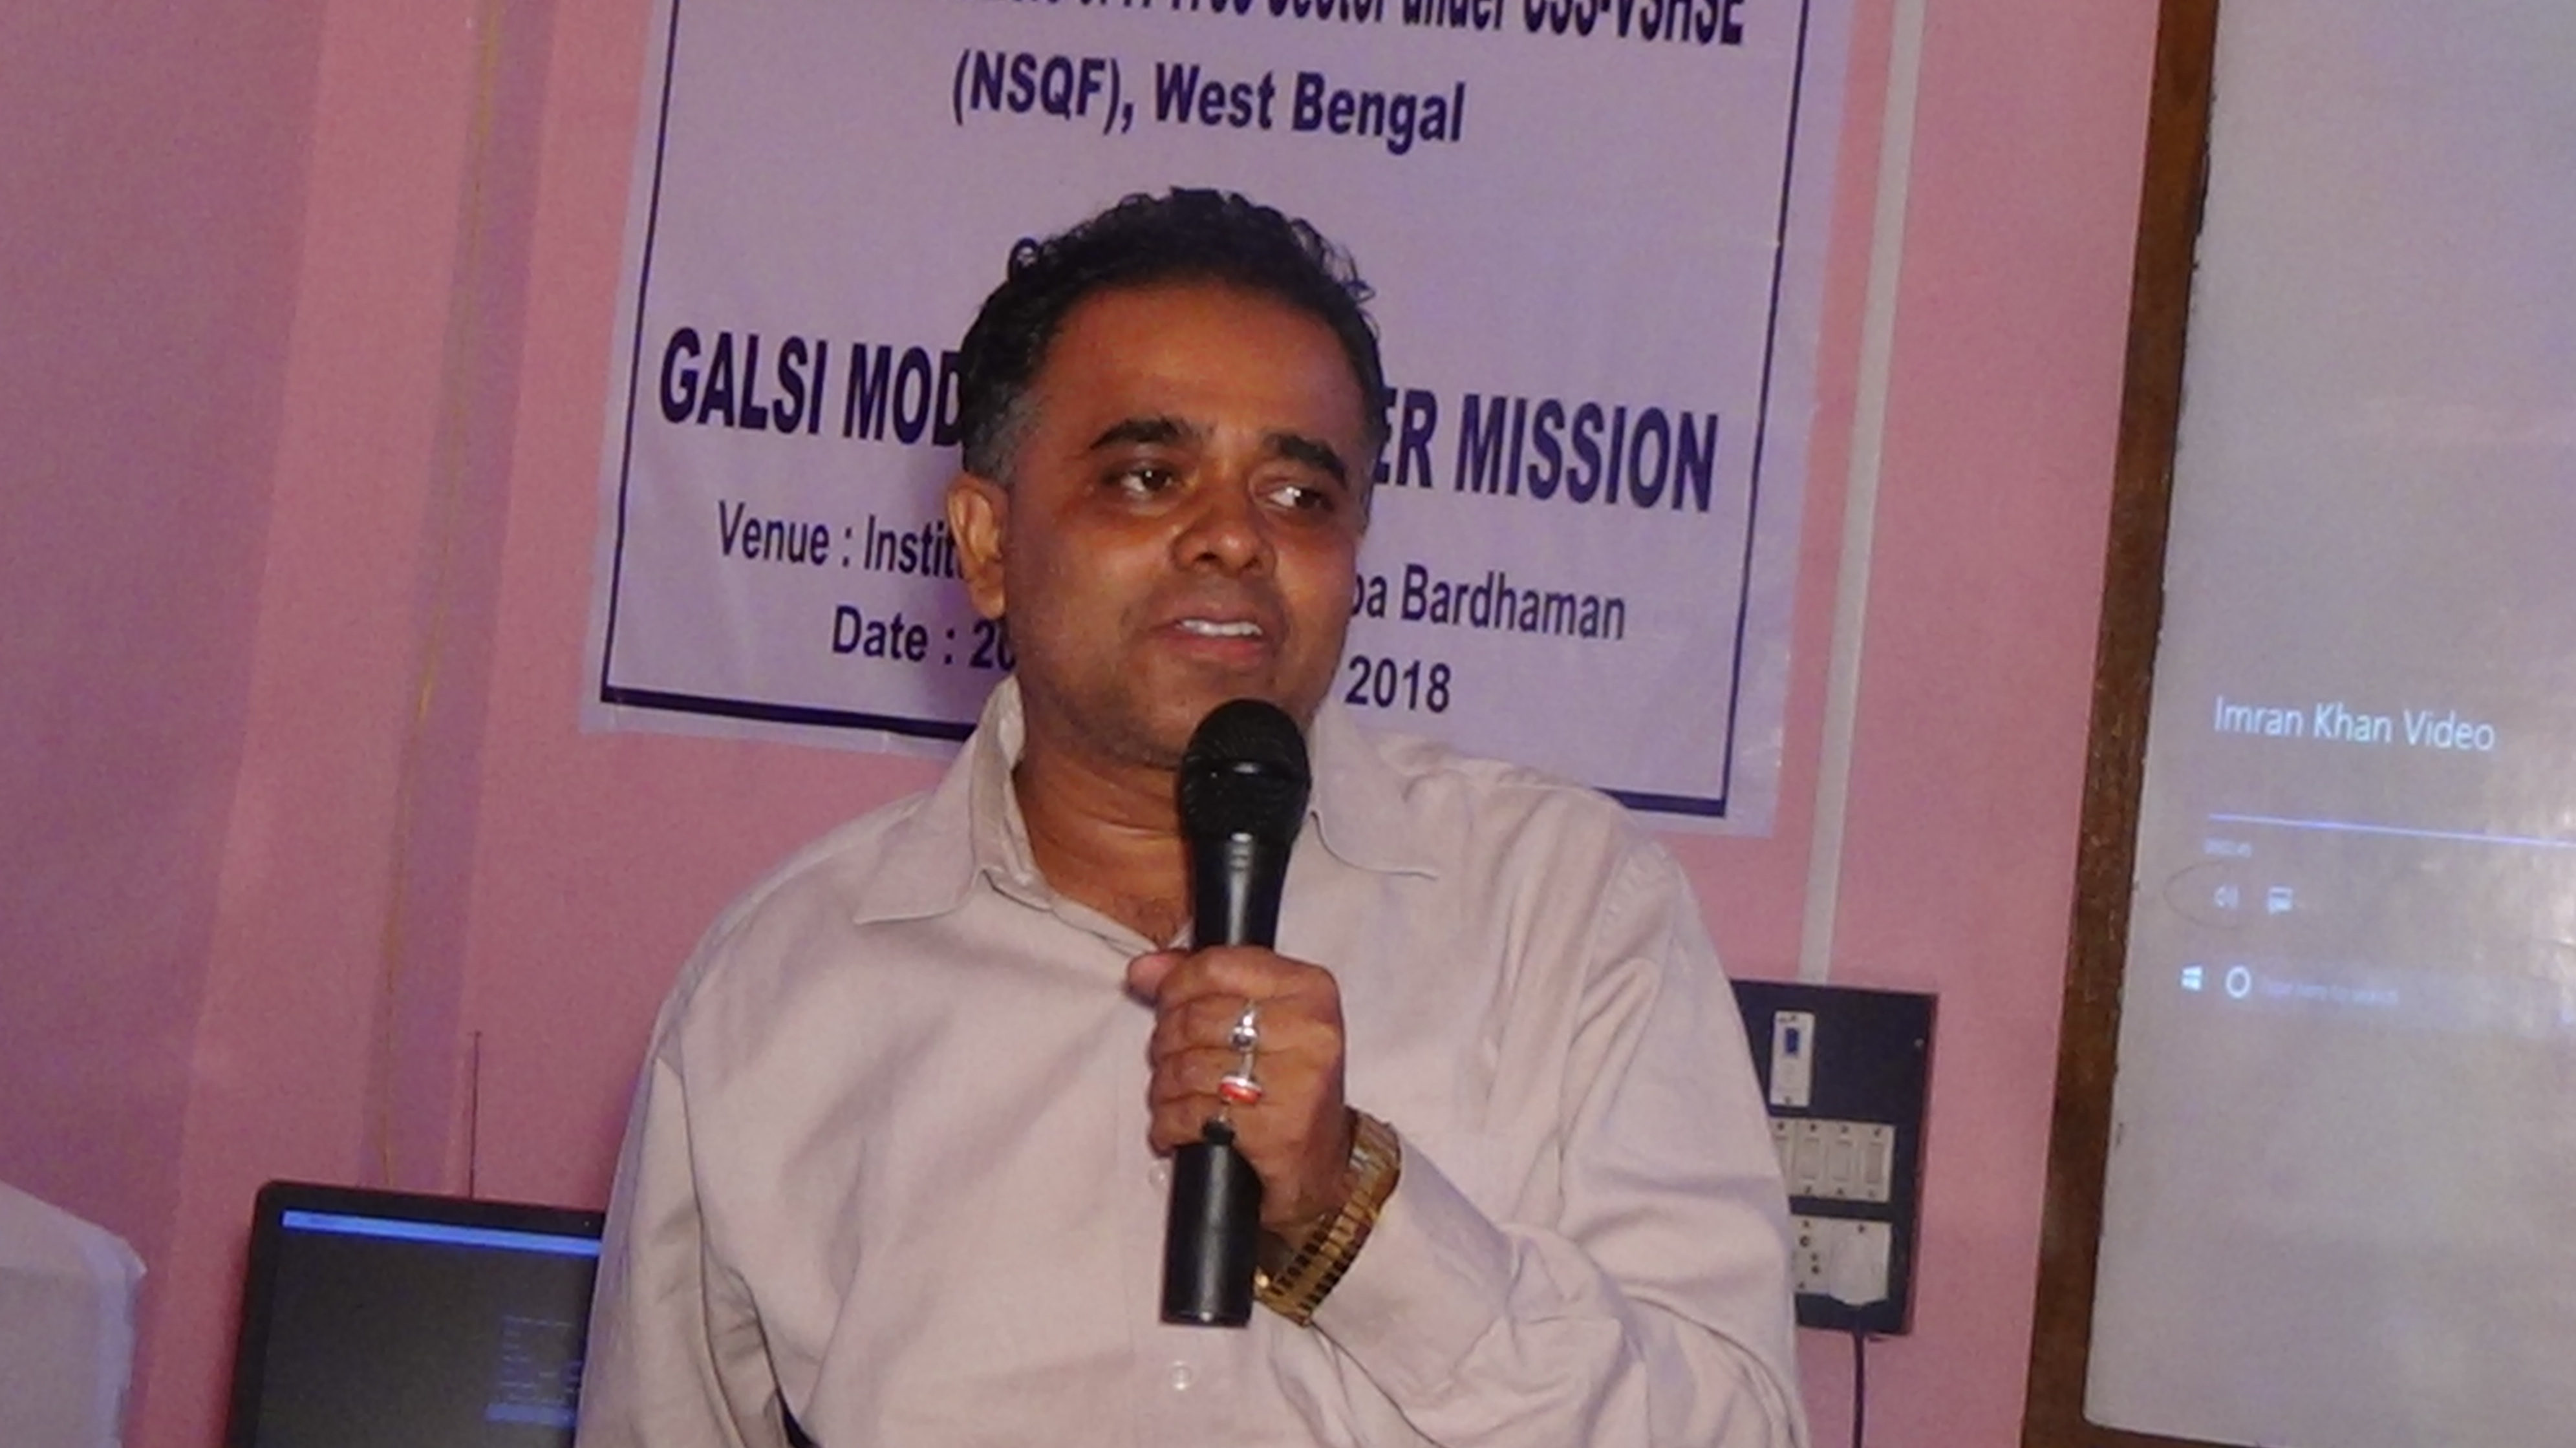 Presentation of Dr. Sunil Karforma,HOD of Computer Science, Burdwan University.